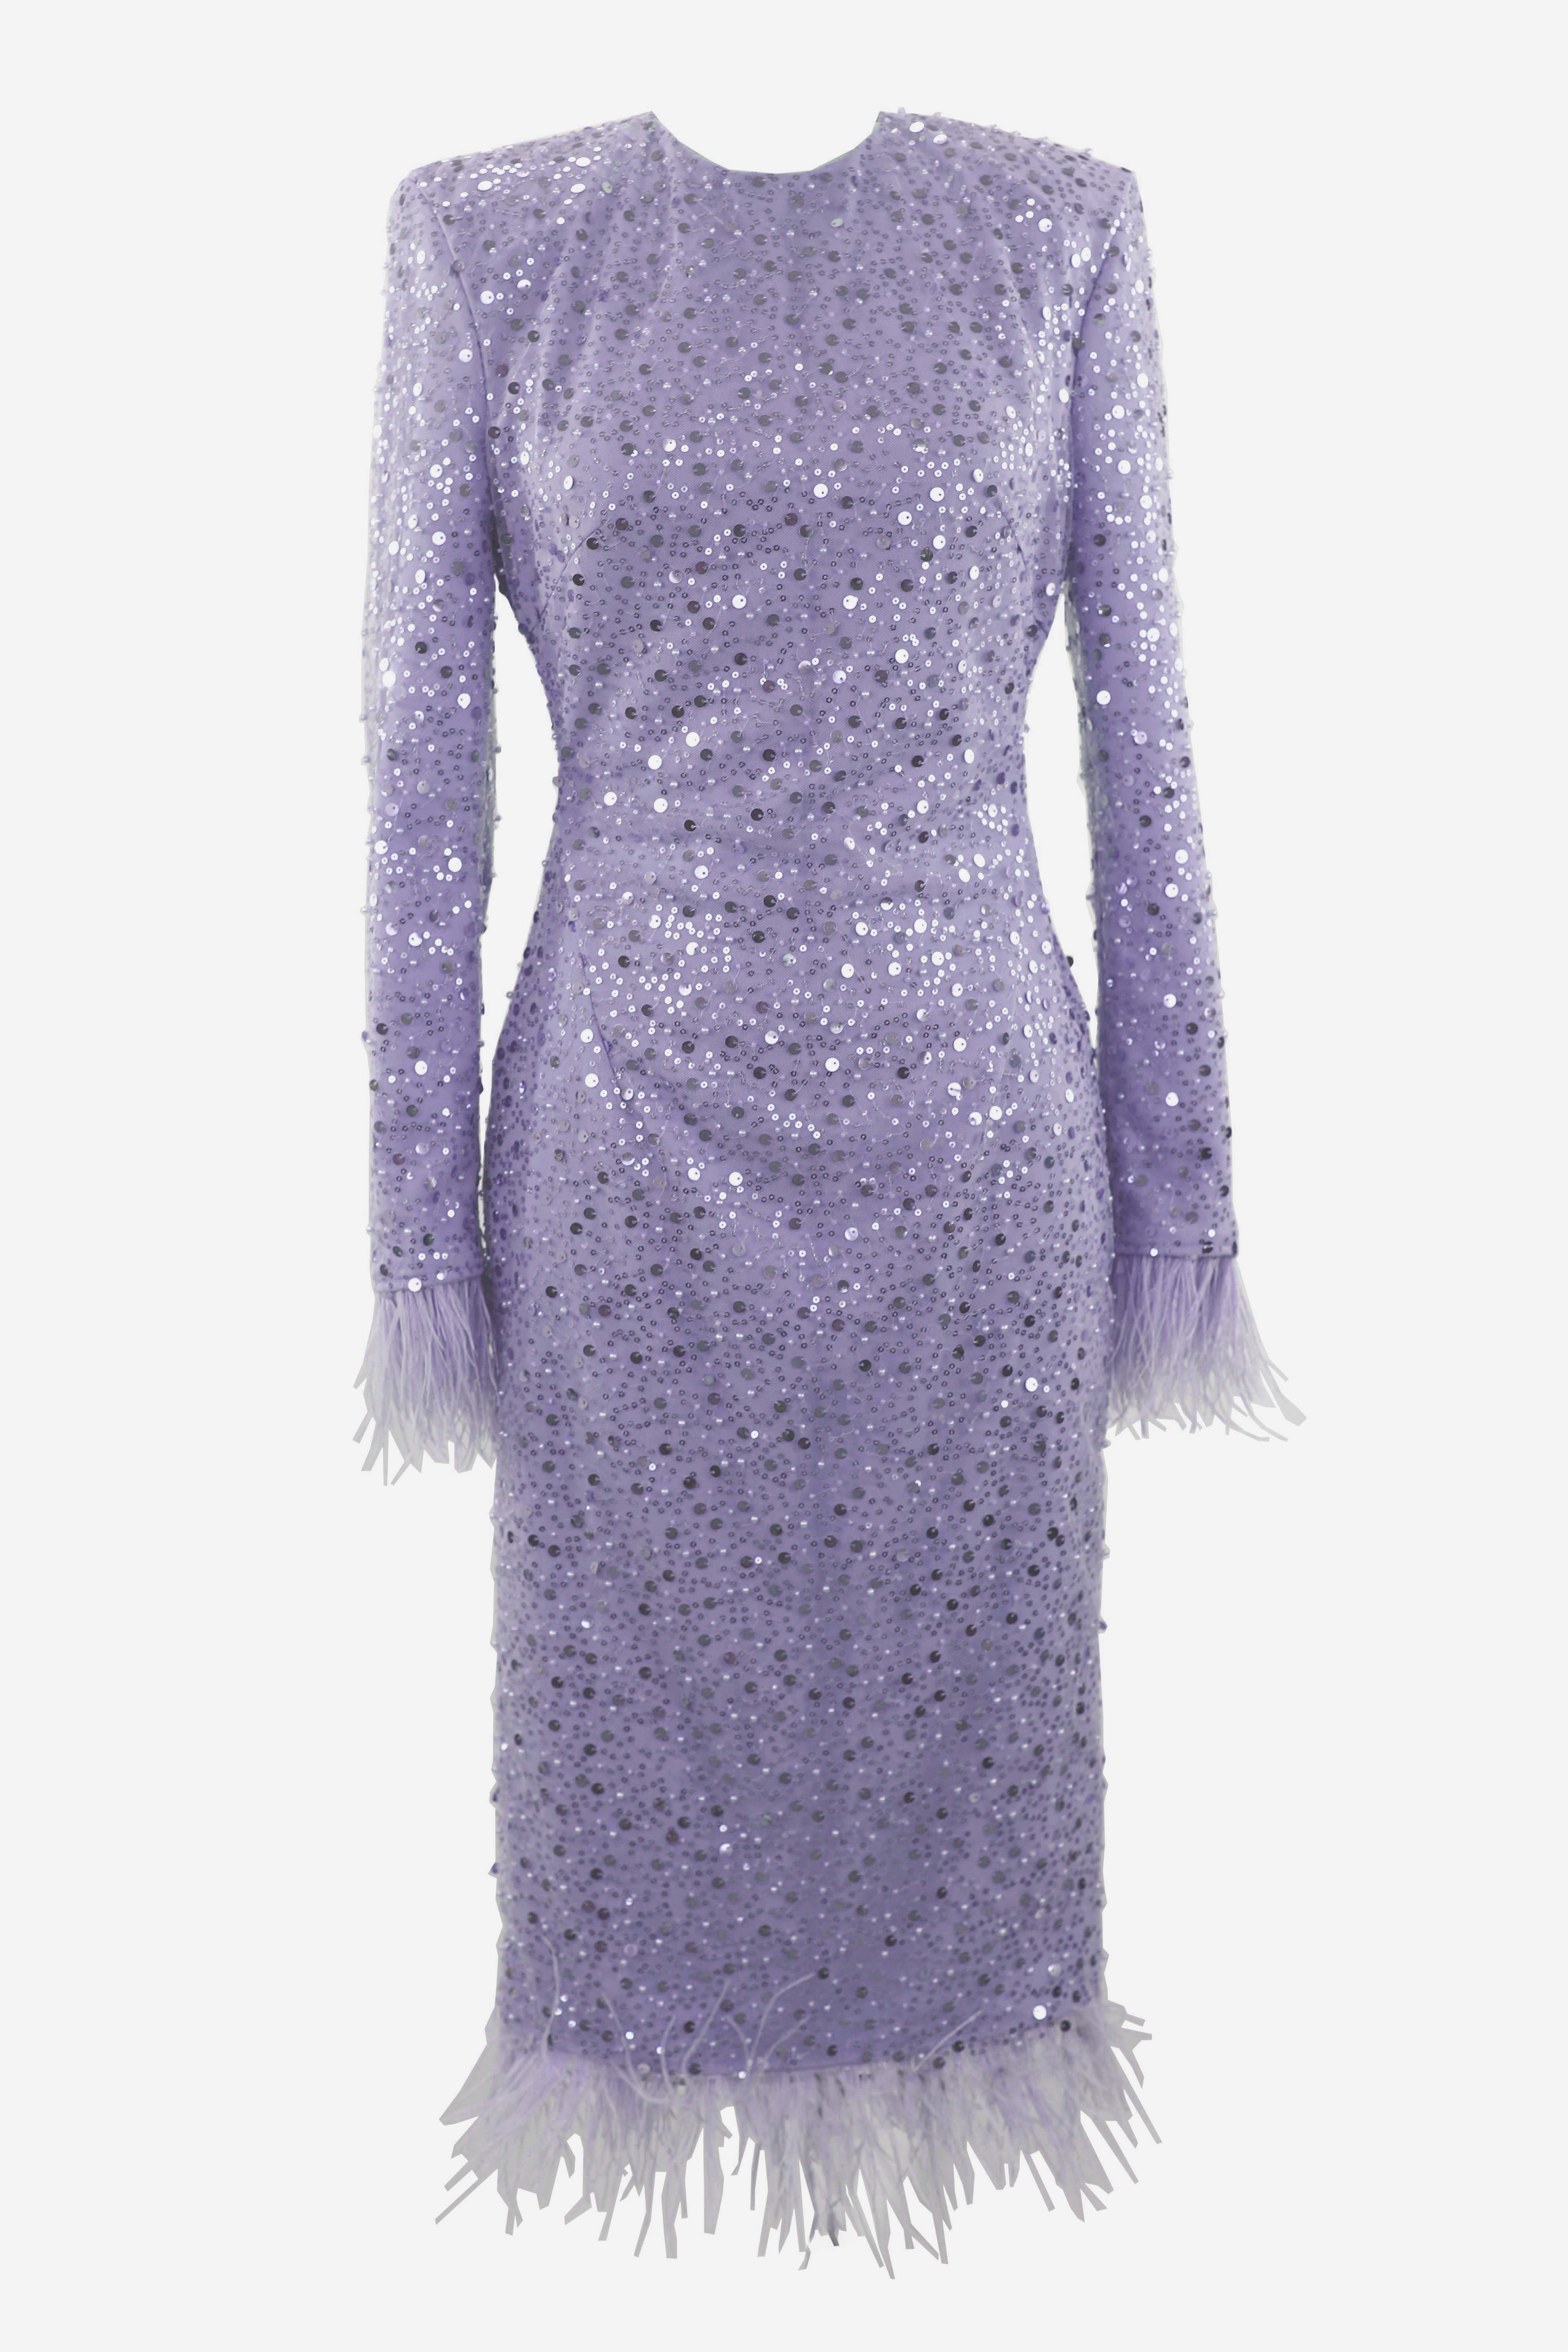 R24173 - LAVENDER 01 - LUCIA lavender embroidery midi dress with feathers AMBAR STUDIO